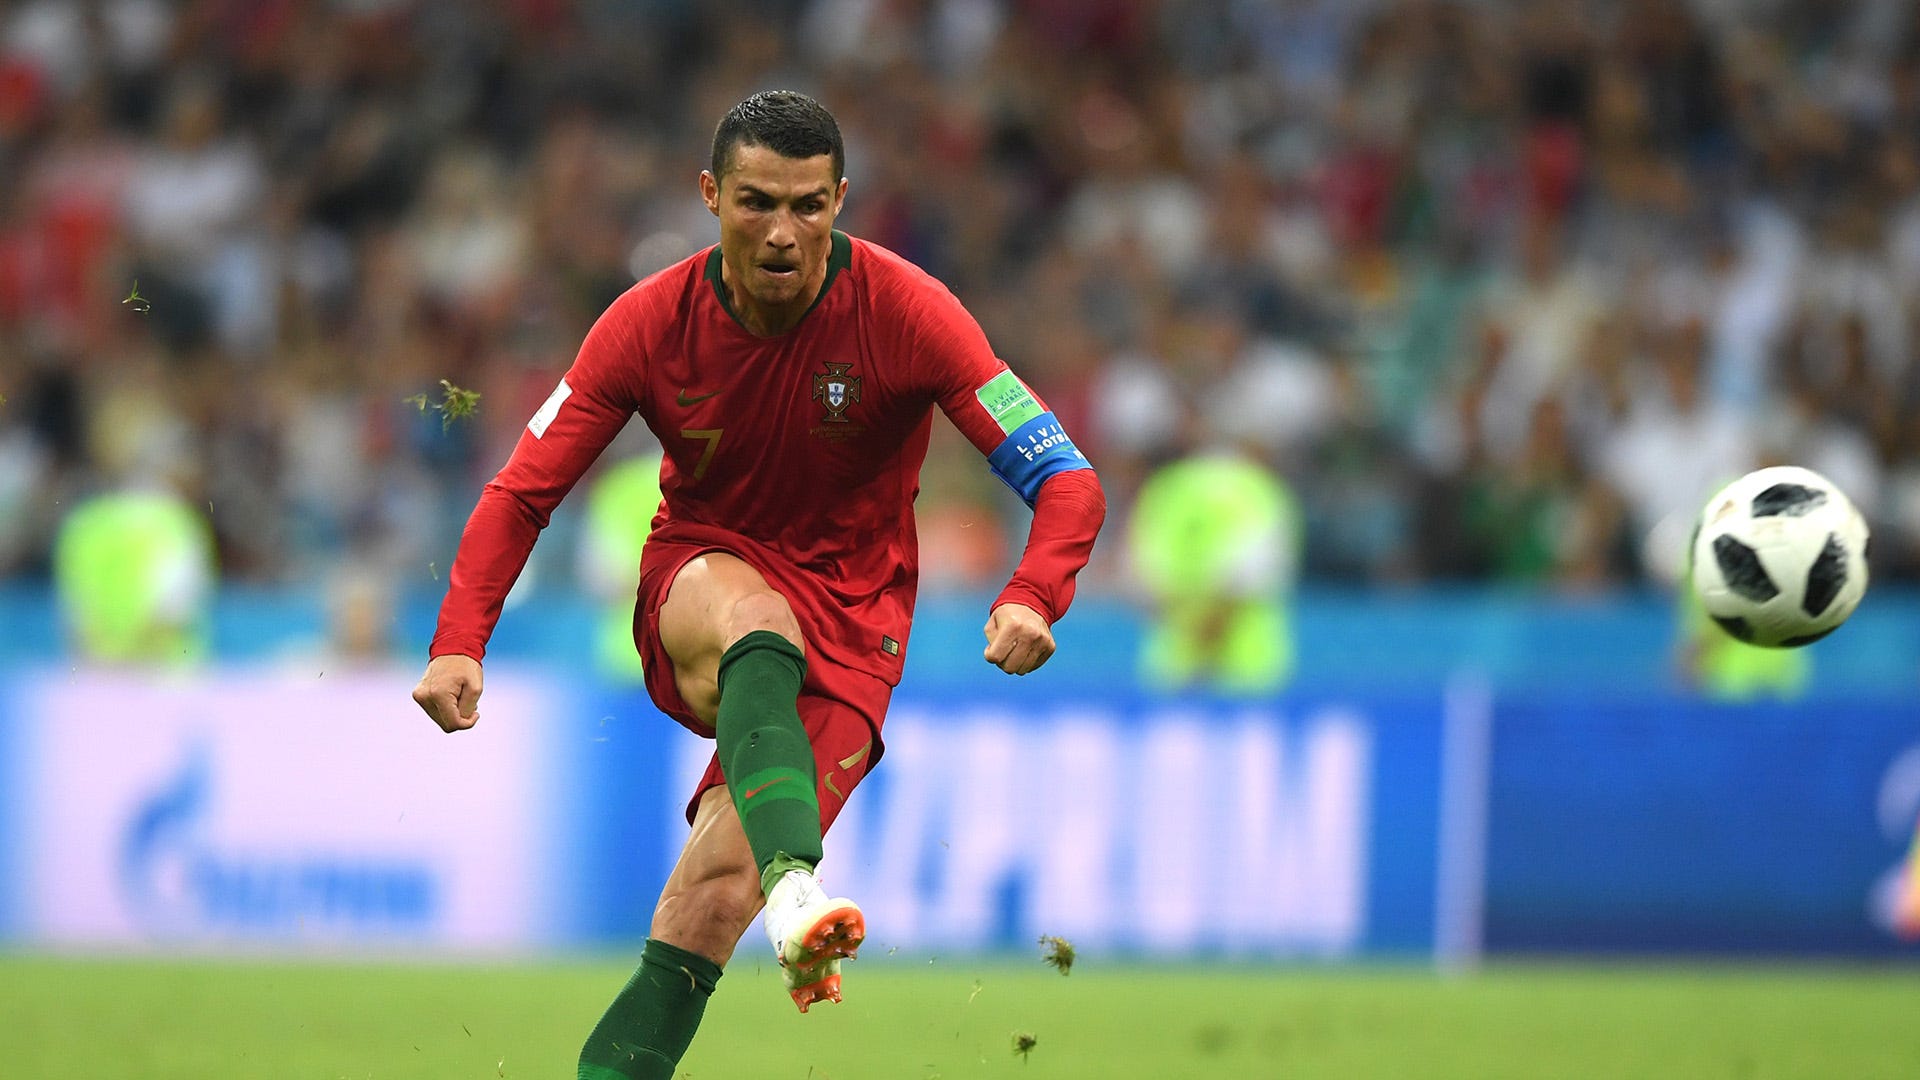 Cristiano Ronaldo’s free kick mentor reveals how he moulded Portugal